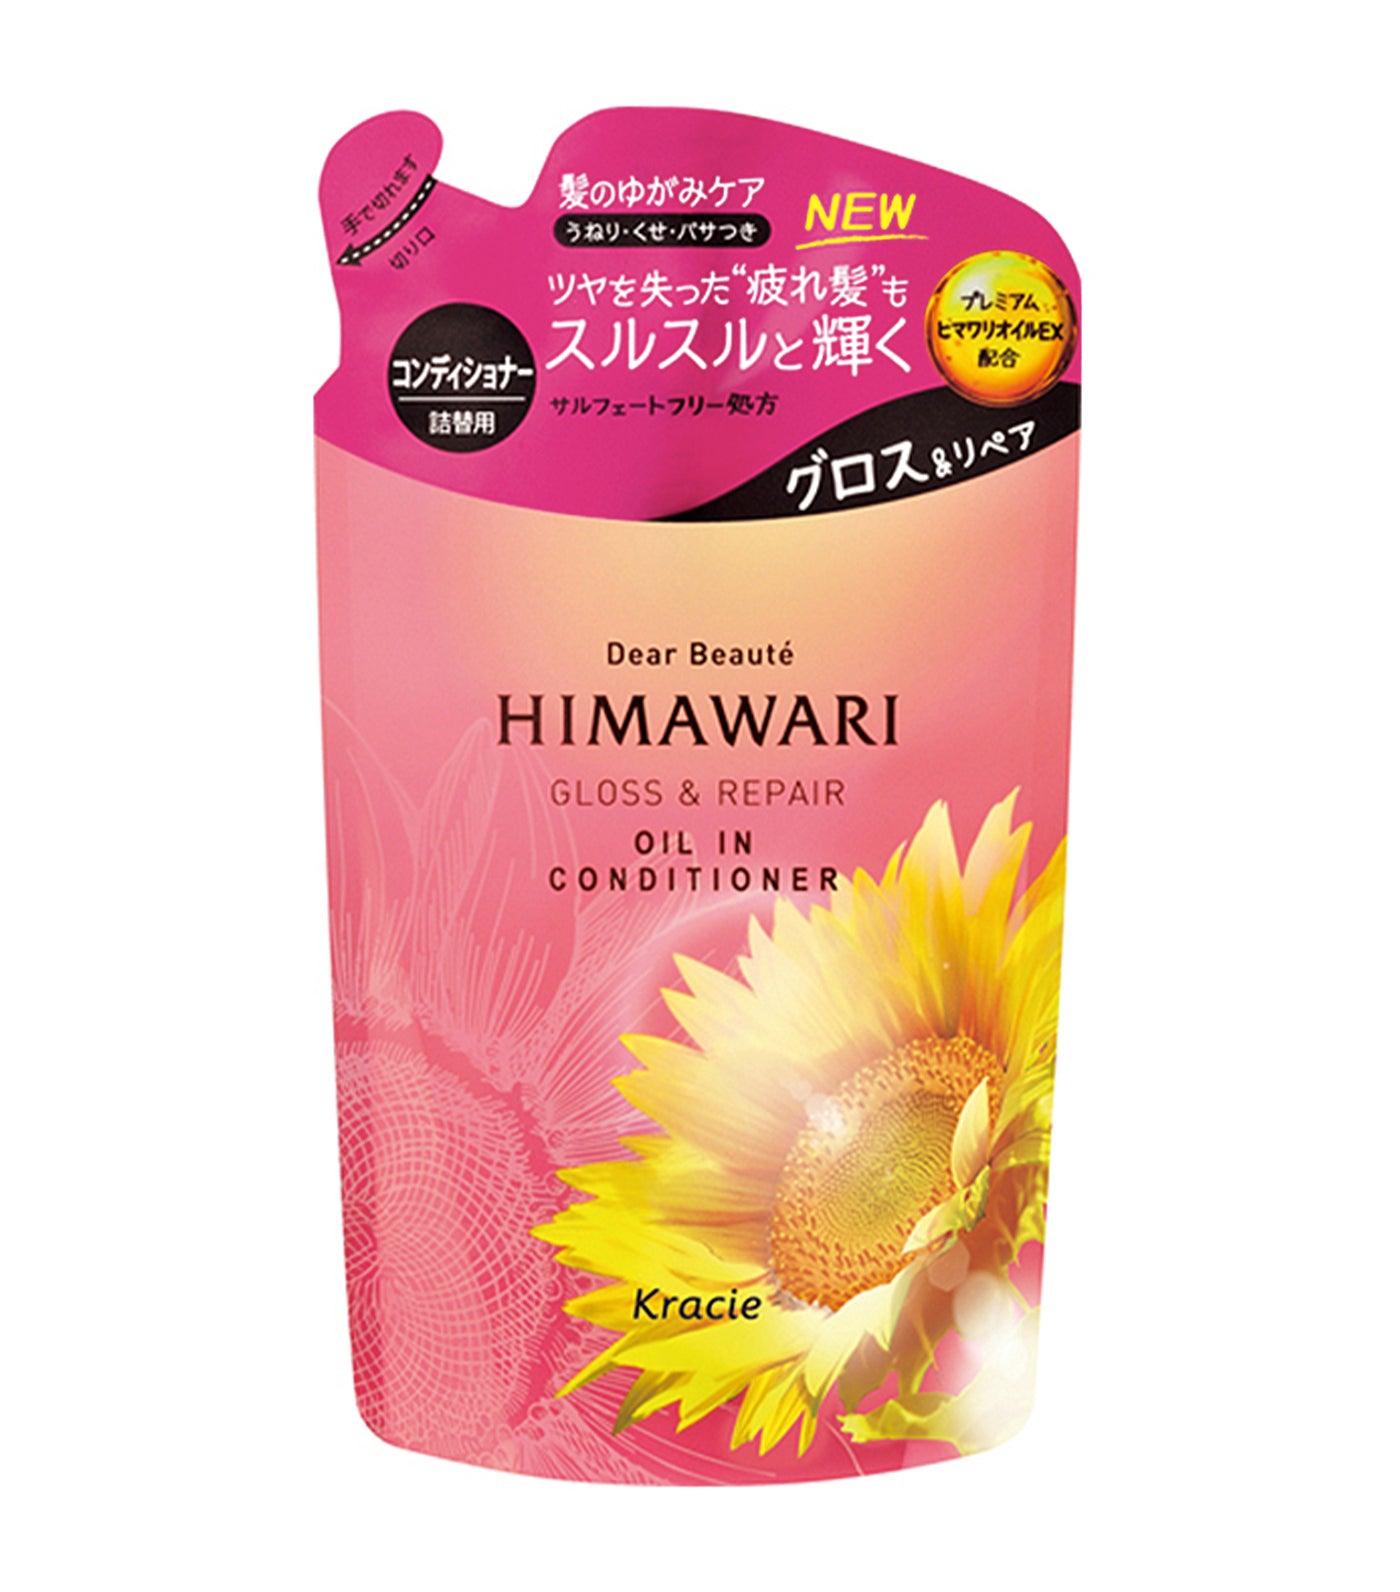 Dear Beaute Himawari Gloss and Repair Oil in Conditioner Refill Pack